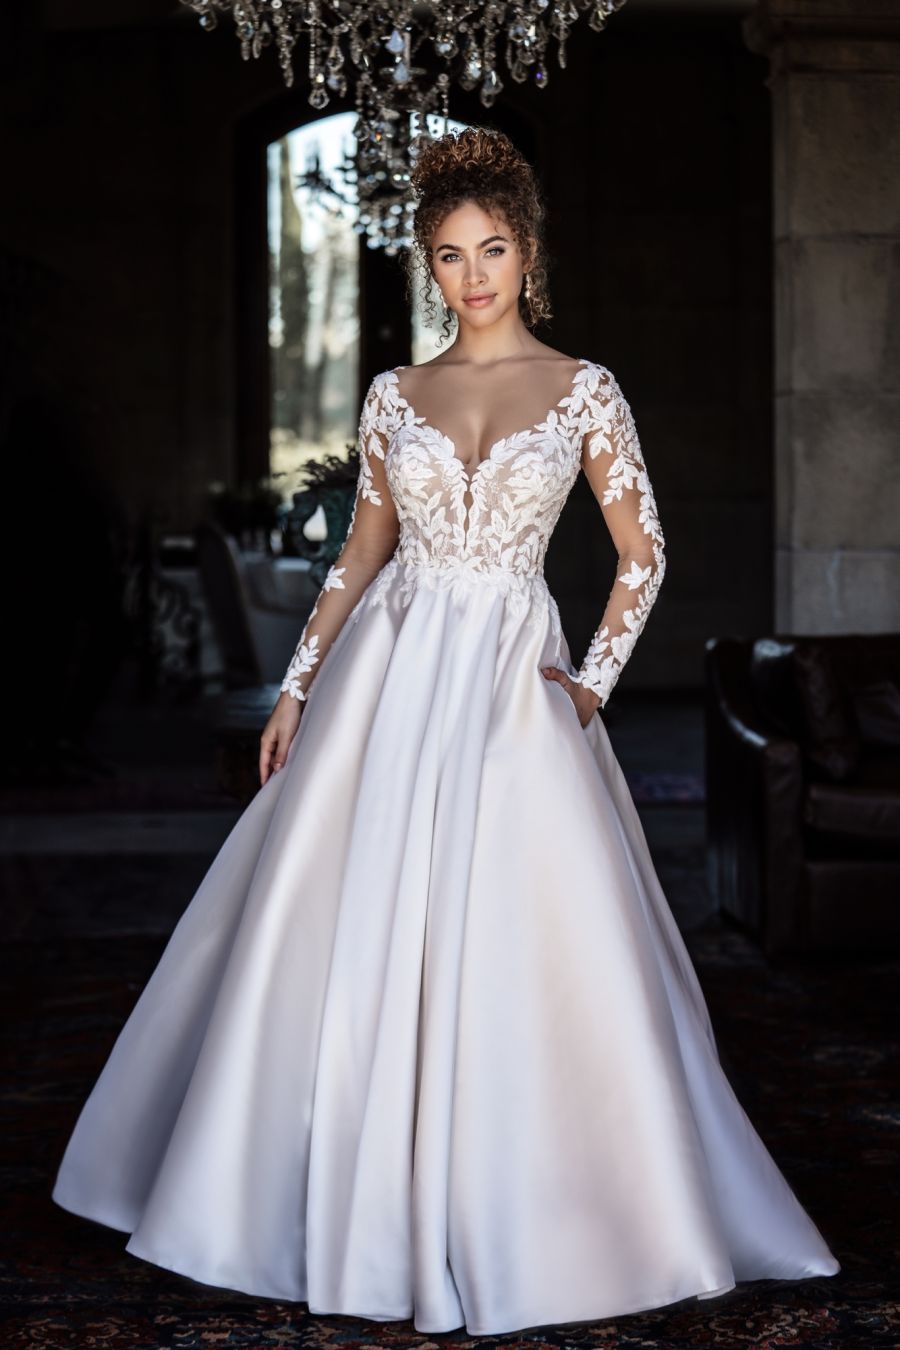 Long Sleeve Elegant Wedding Dresses Modest Lace Classy Bridal Gown VW1 –  Viniodress